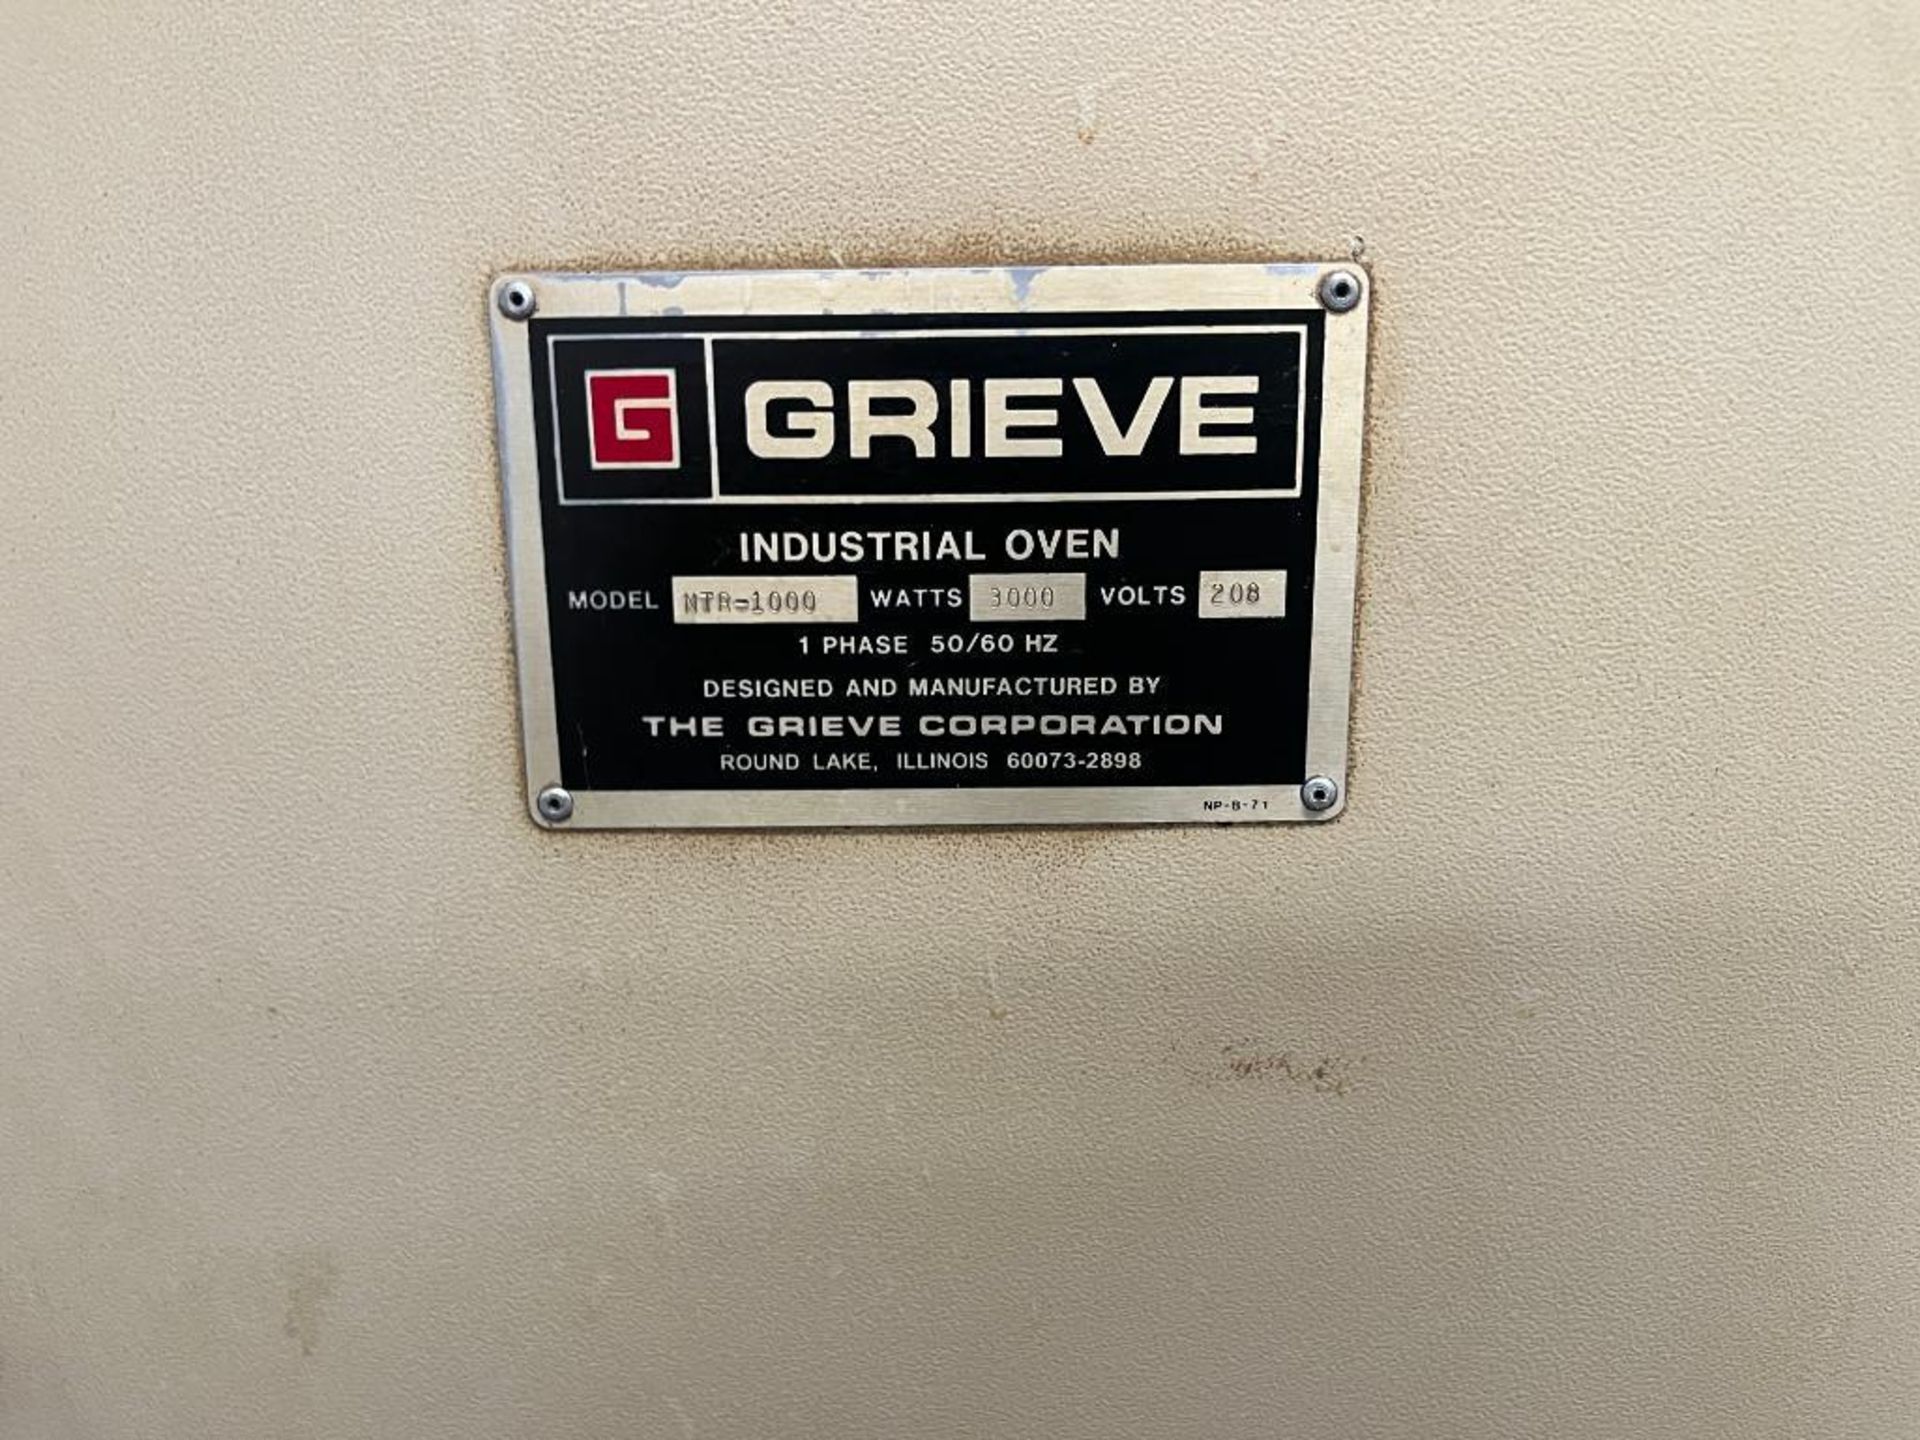 Grieve Double-Door Bench Top Electric Oven Model MTR-1000, 3000 Watts, 208 Volts, Partlow Controls - Image 5 of 7